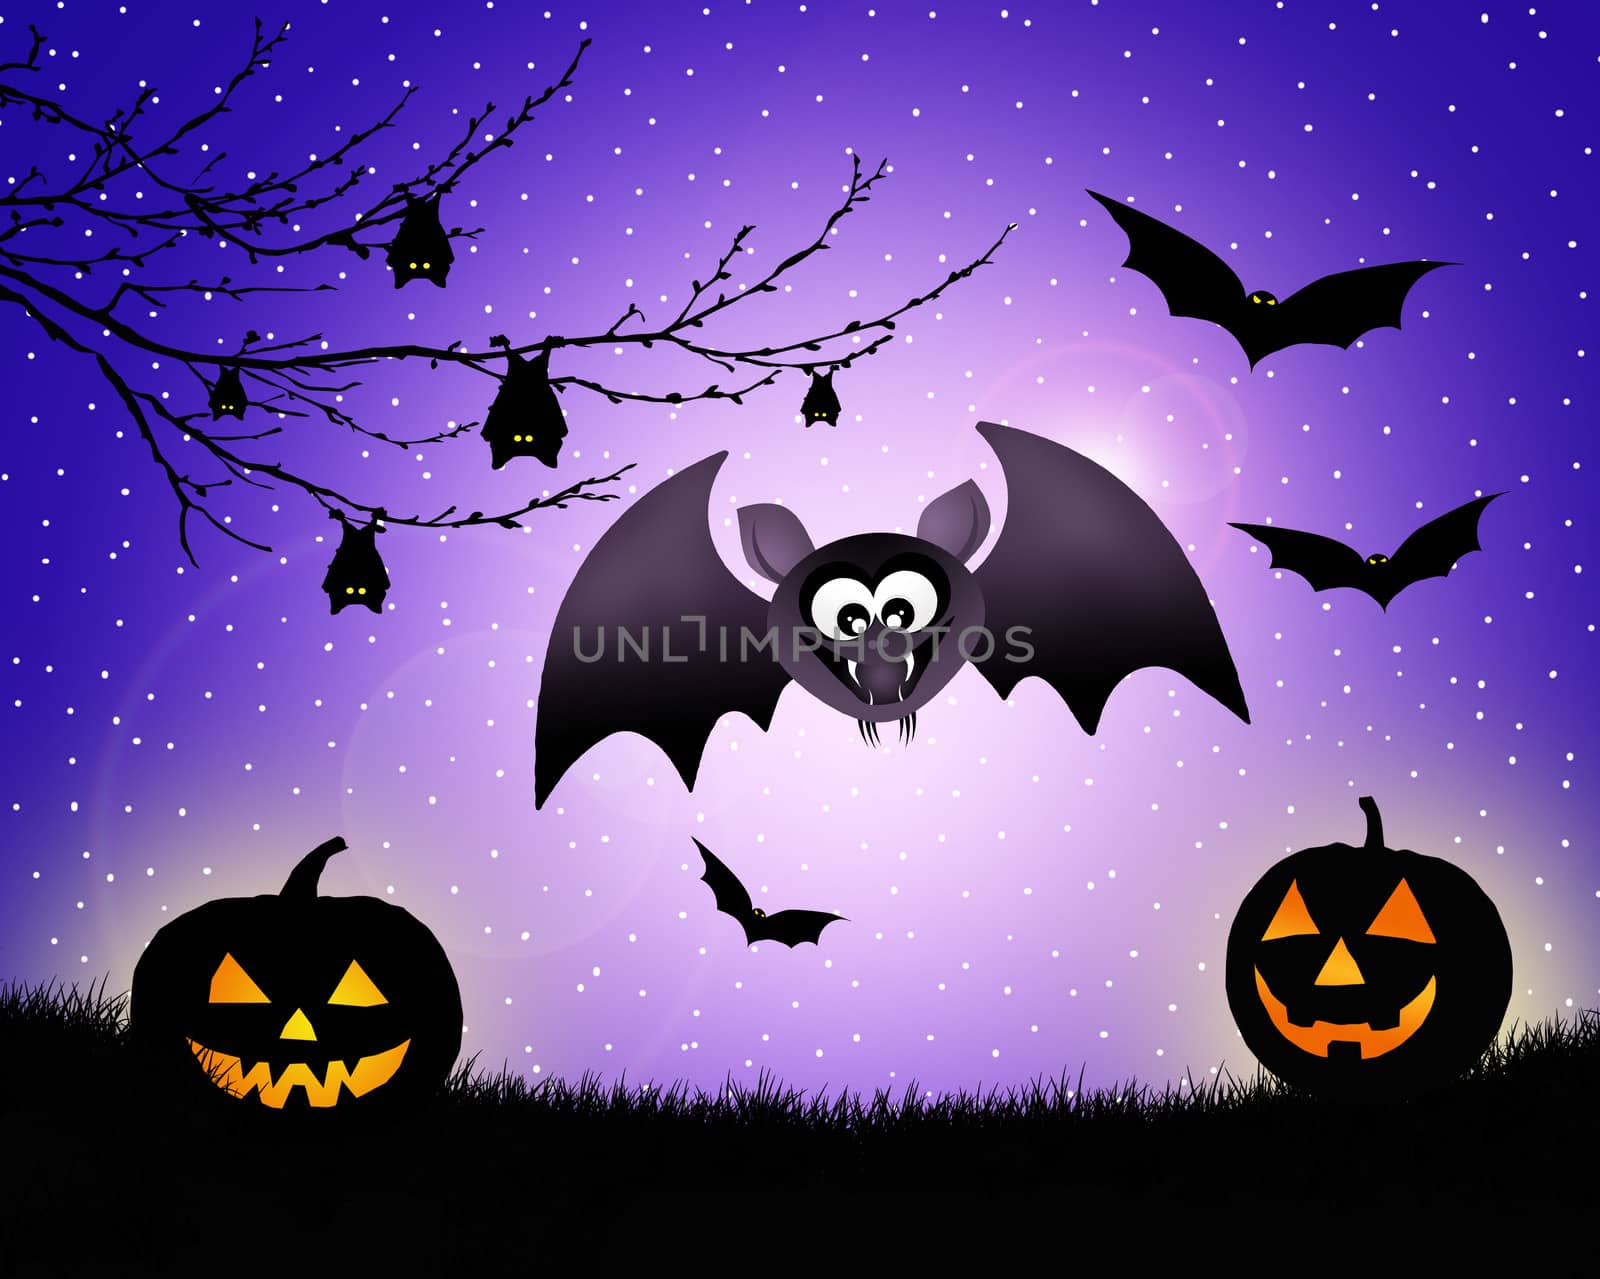 Bat of Halloween by adrenalina